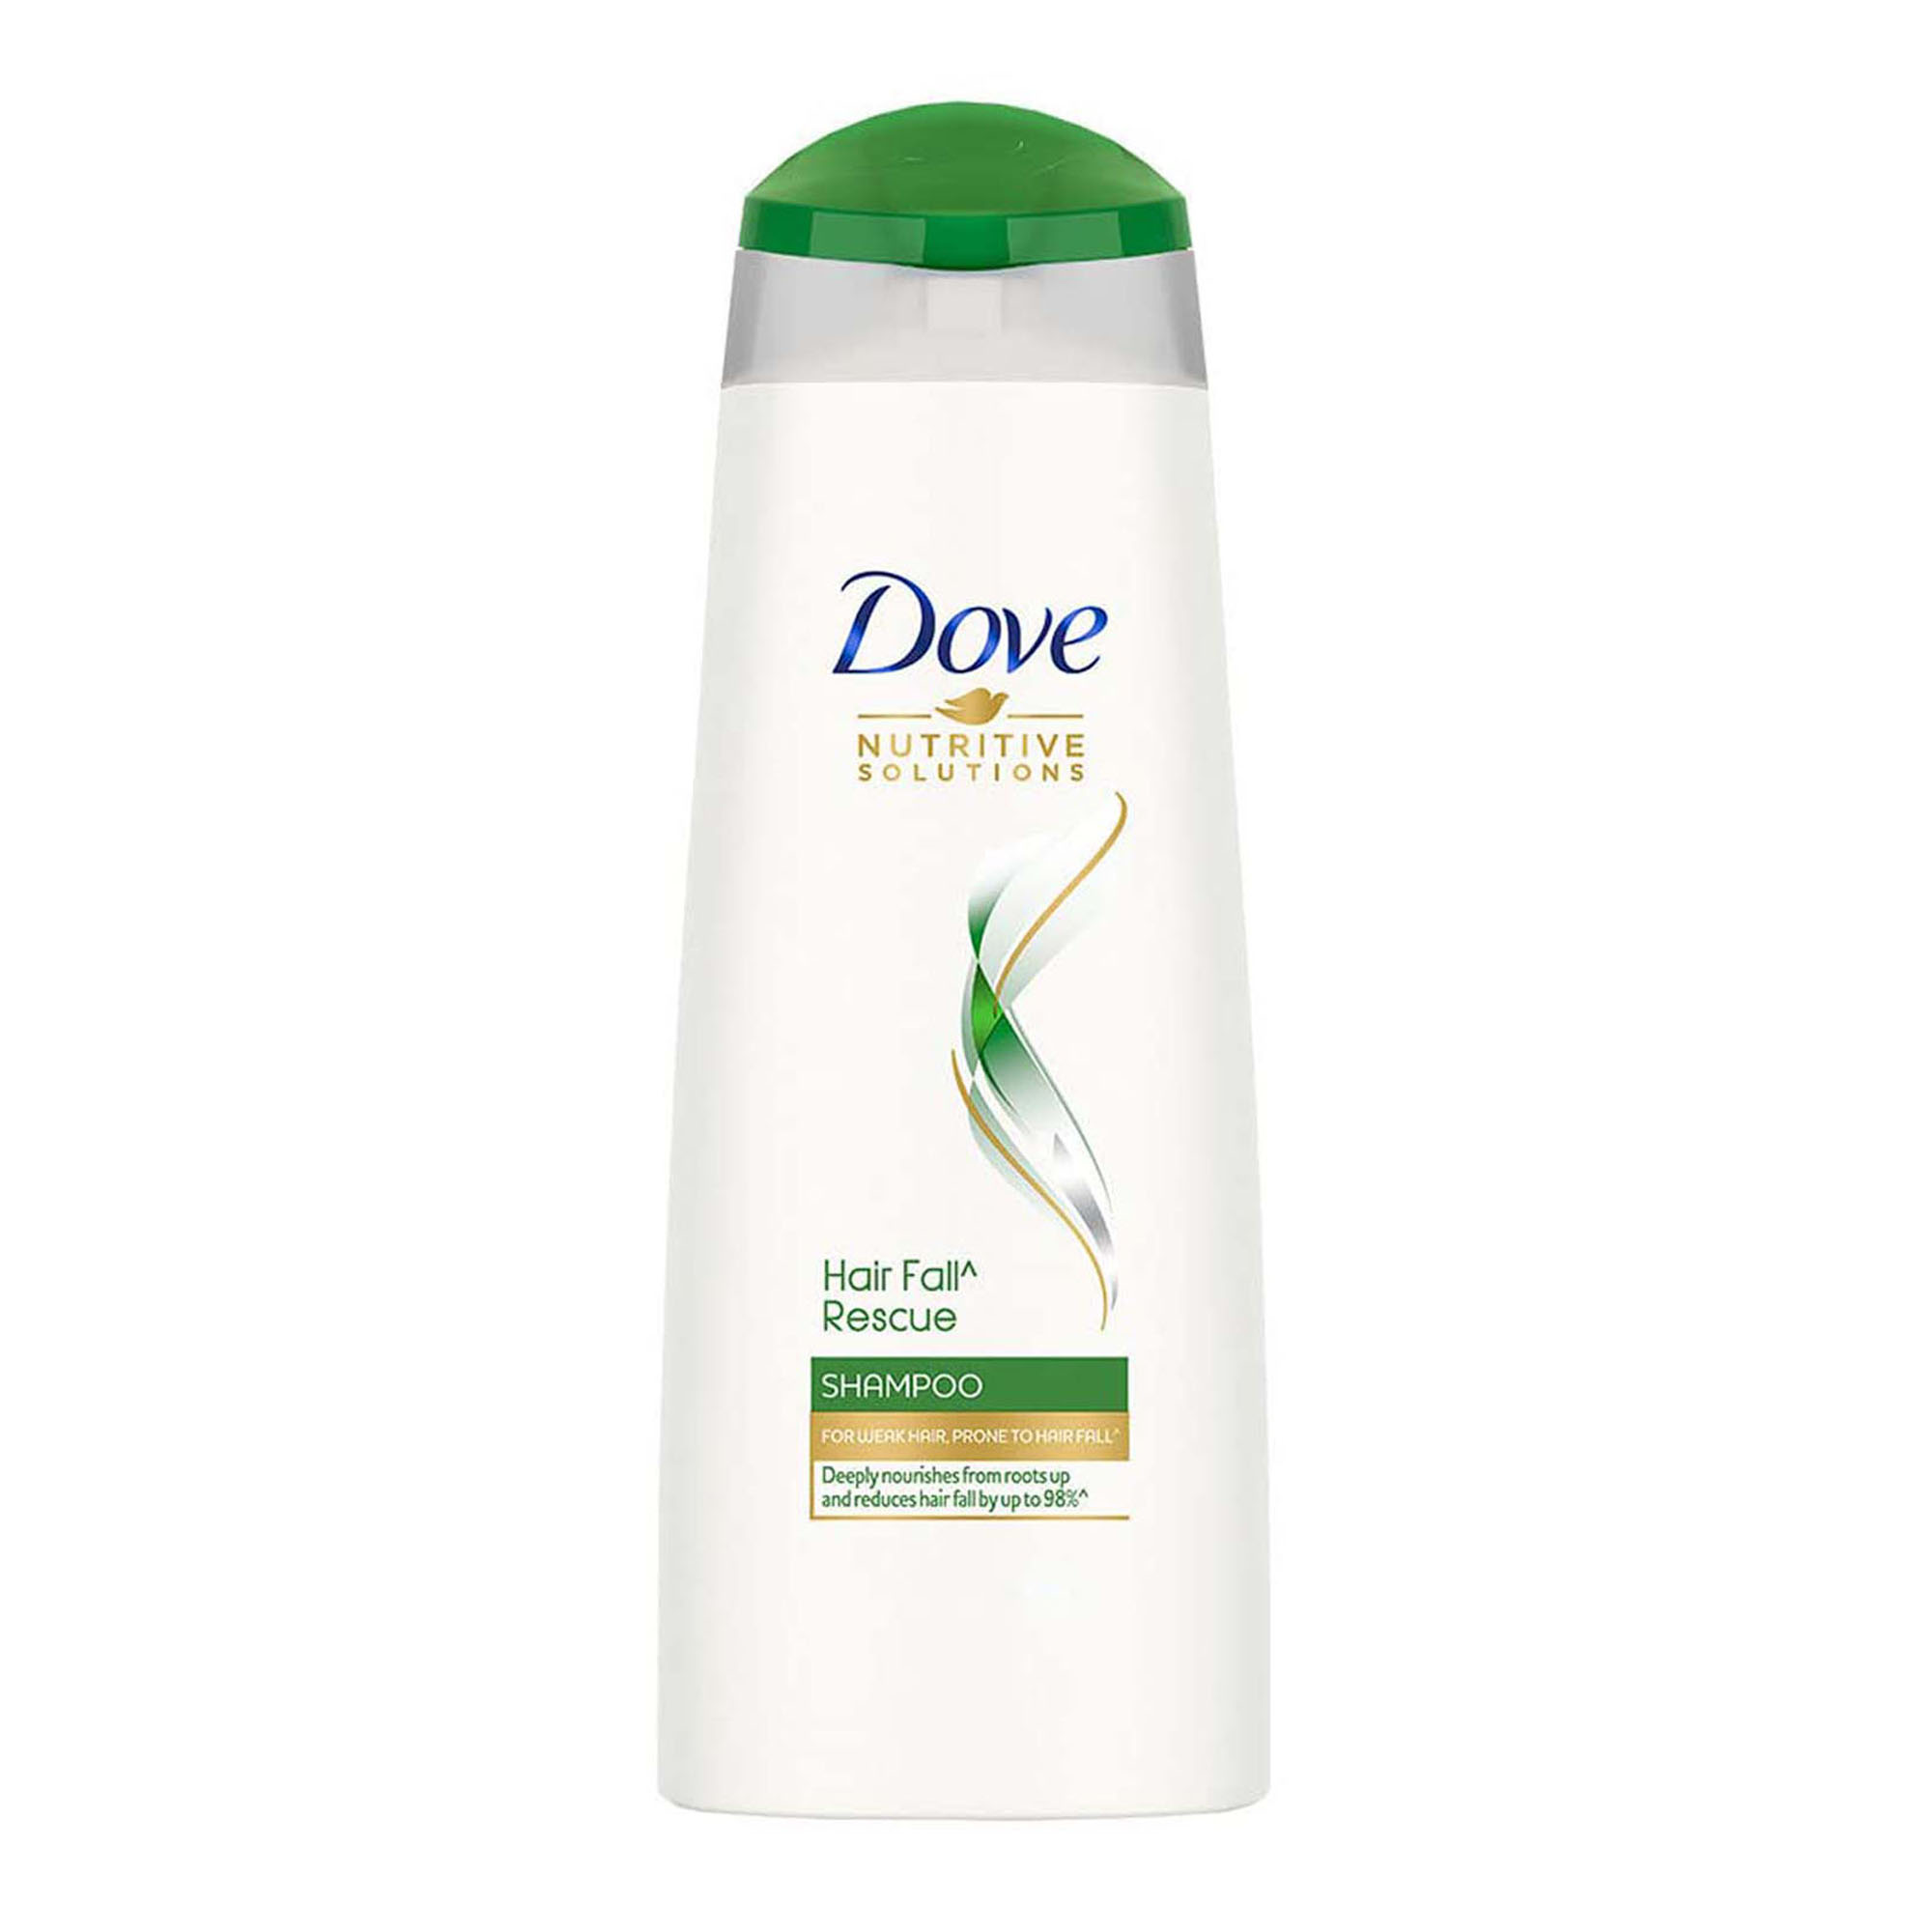 Dove Hair Fall Rescue S...